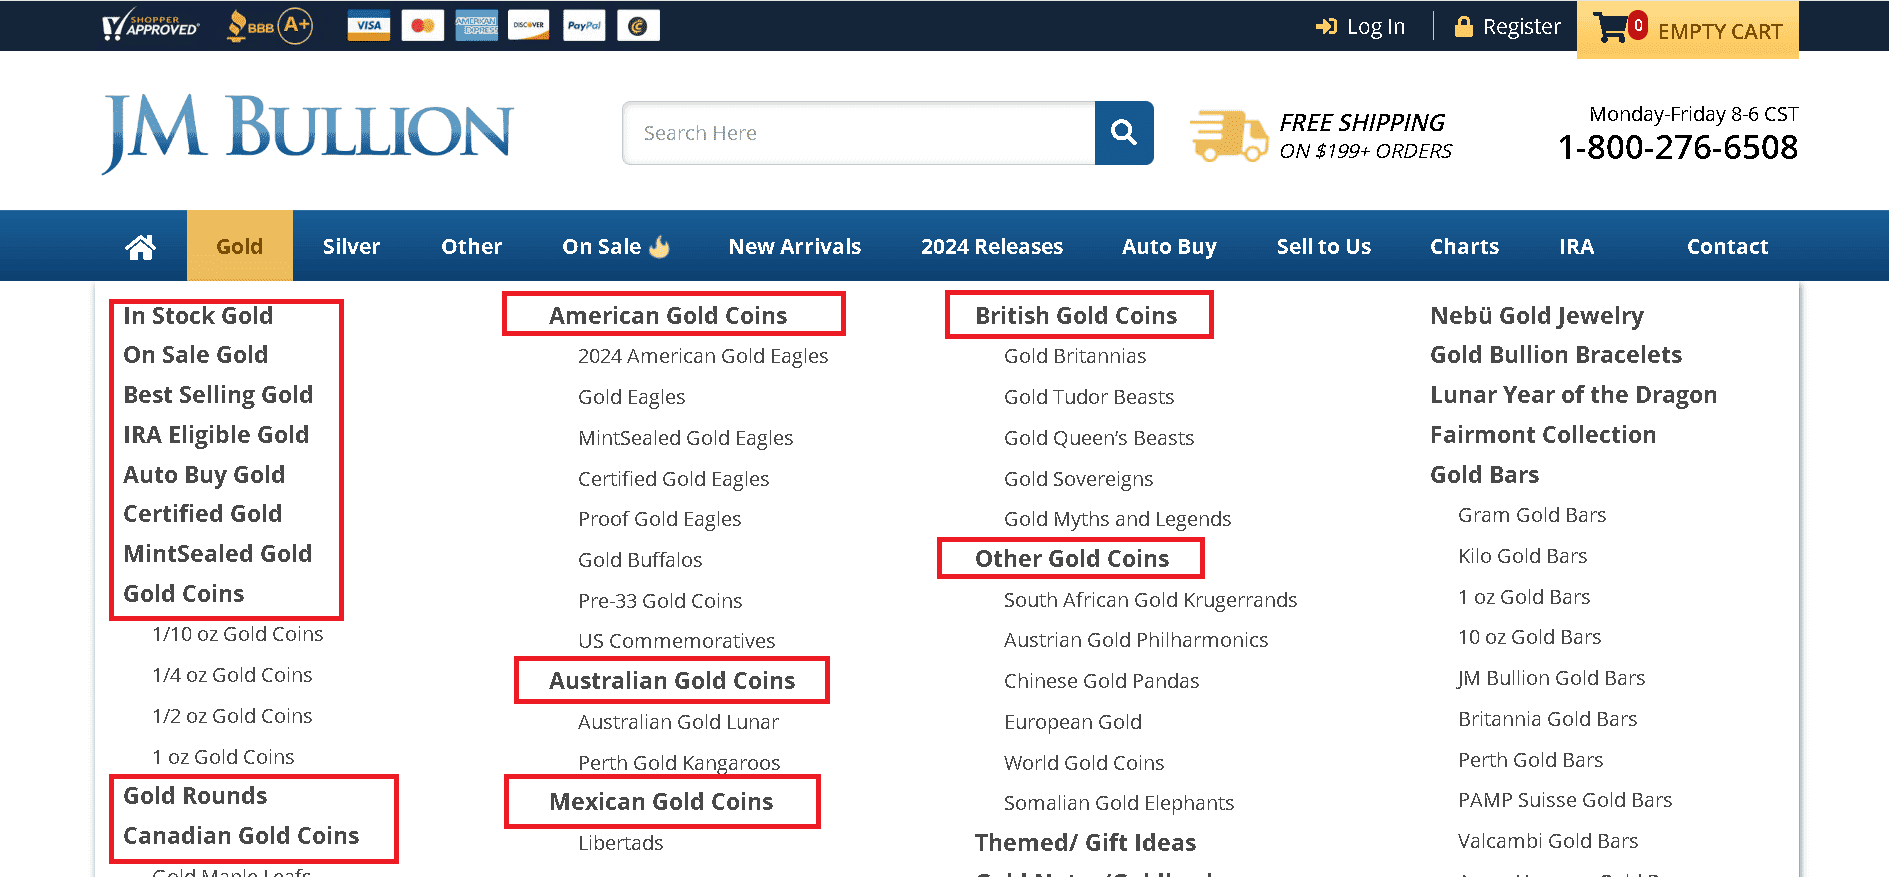 JM Bullion gold bars and cons